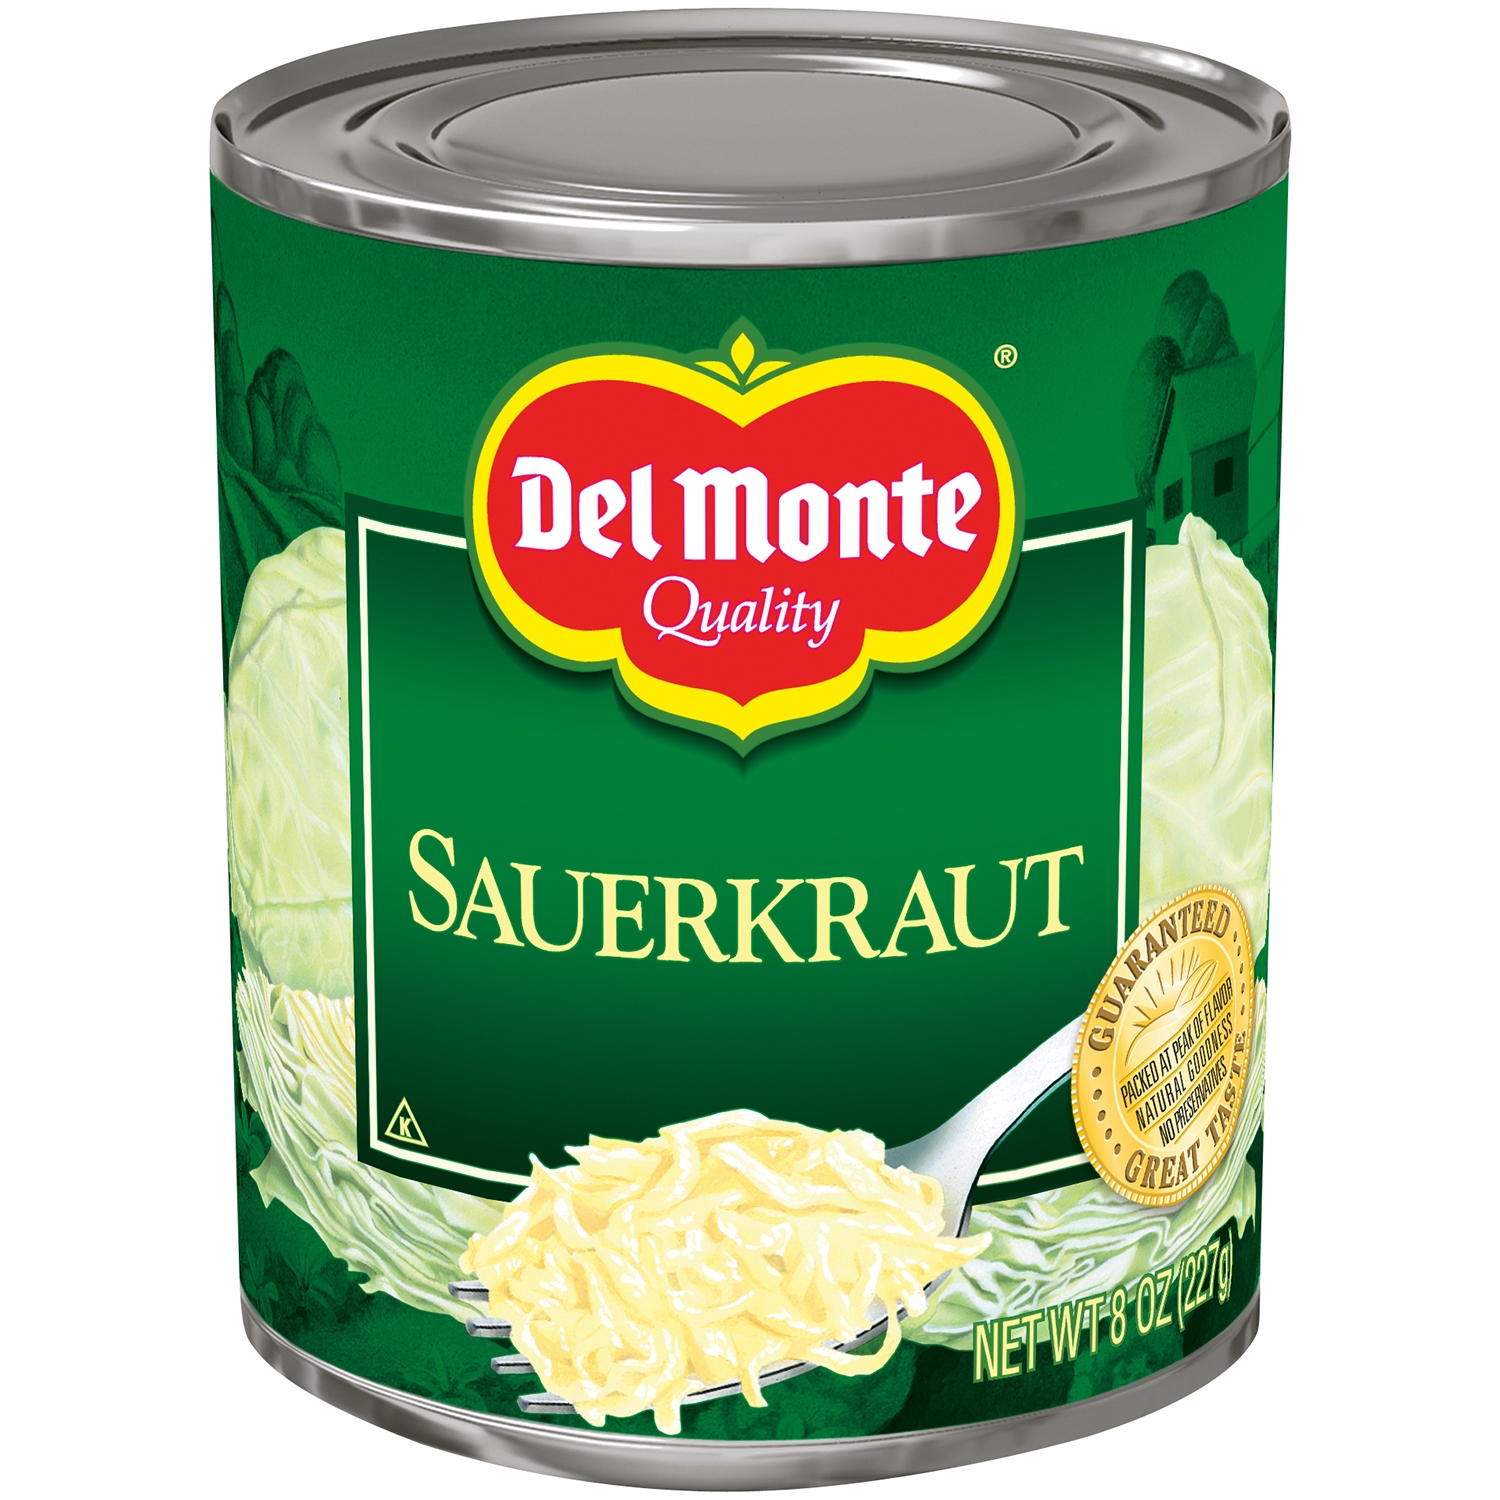 Del Monte Sauerkraut 8 oz